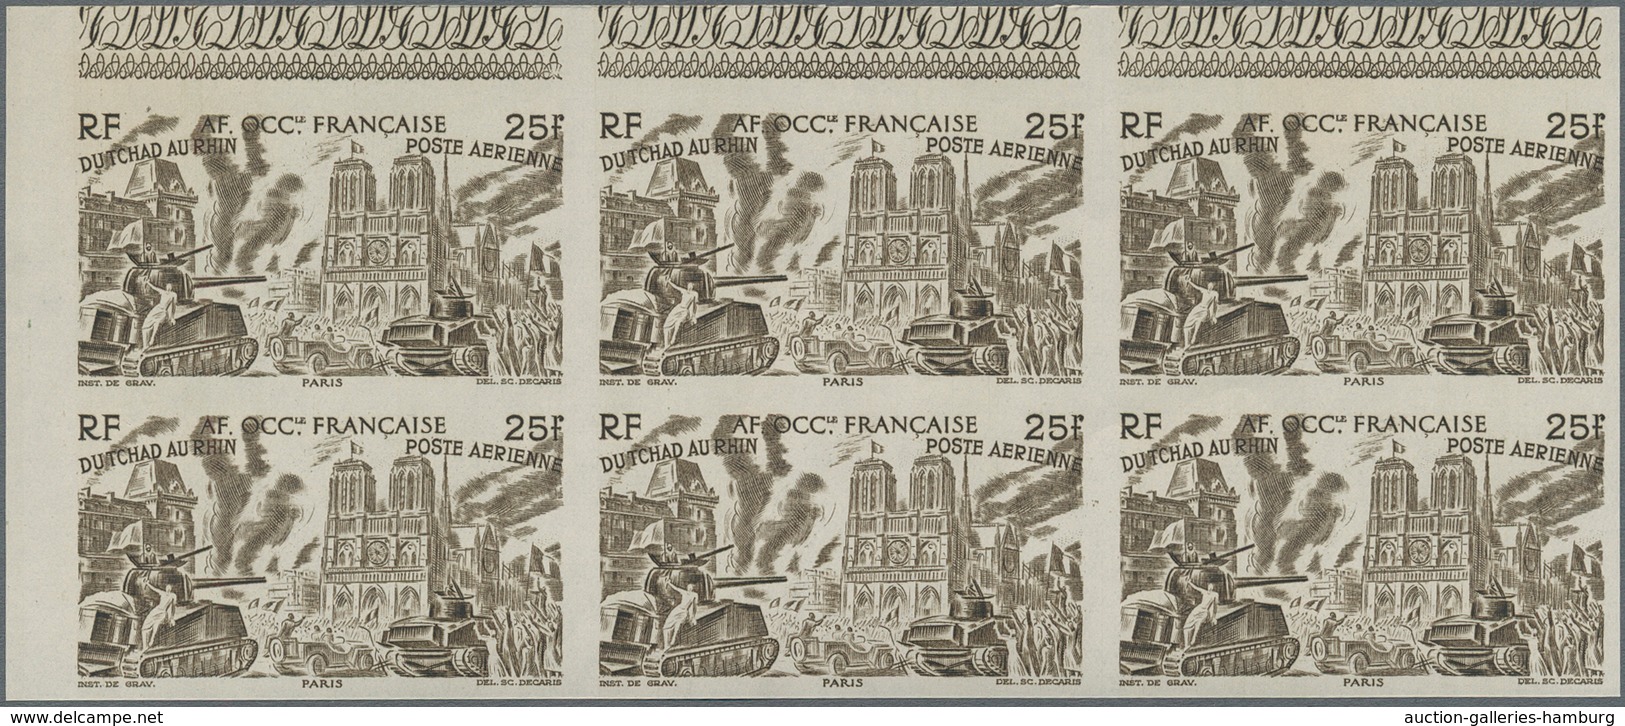 Französisch-Westafrika: 1946, Du Chad au Rhin, 5fr.-50fr., complete set of six values in imperforate